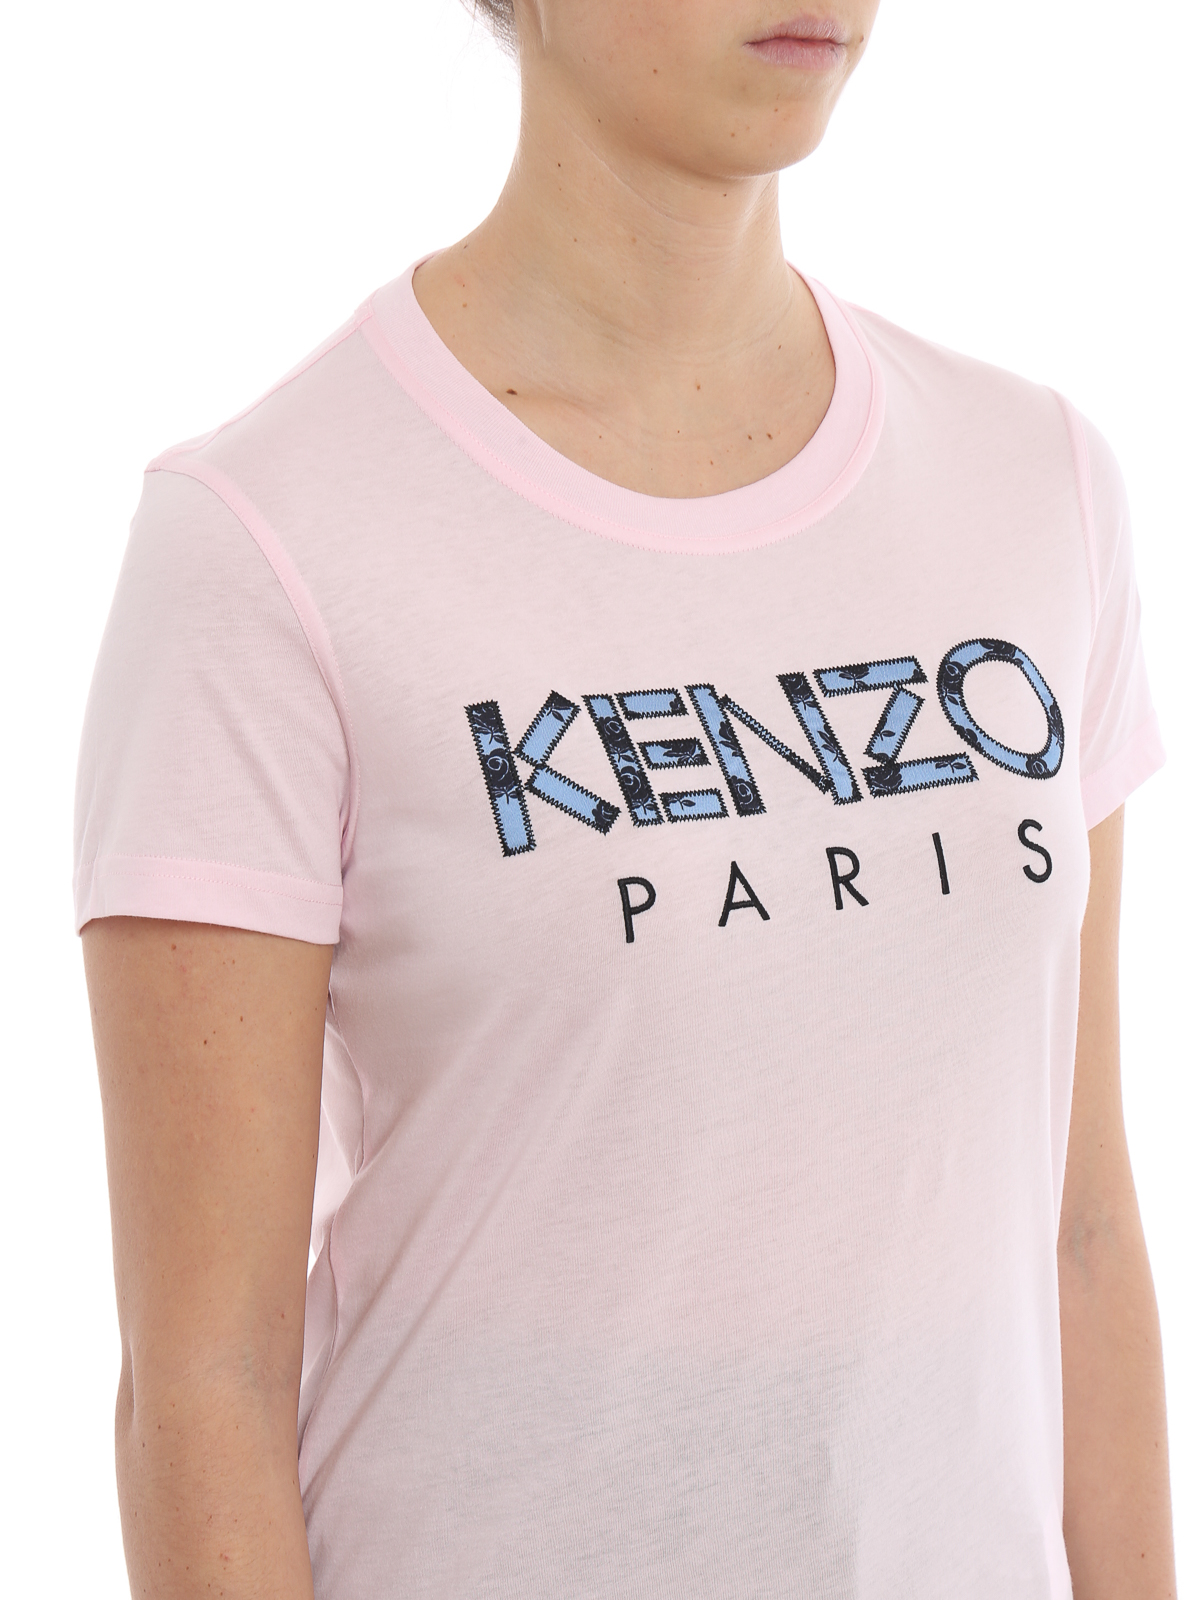 T-shirts Kenzo - Kenzo Roses pink T-shirt - F952TS72199033 | iKRIX.com